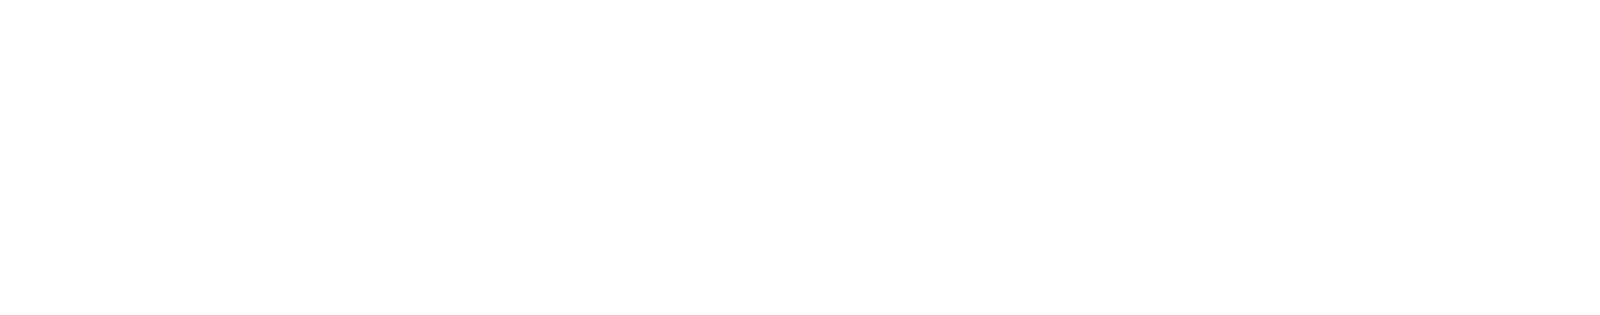 bjorg thorhallsdottir logo underskrift hvit